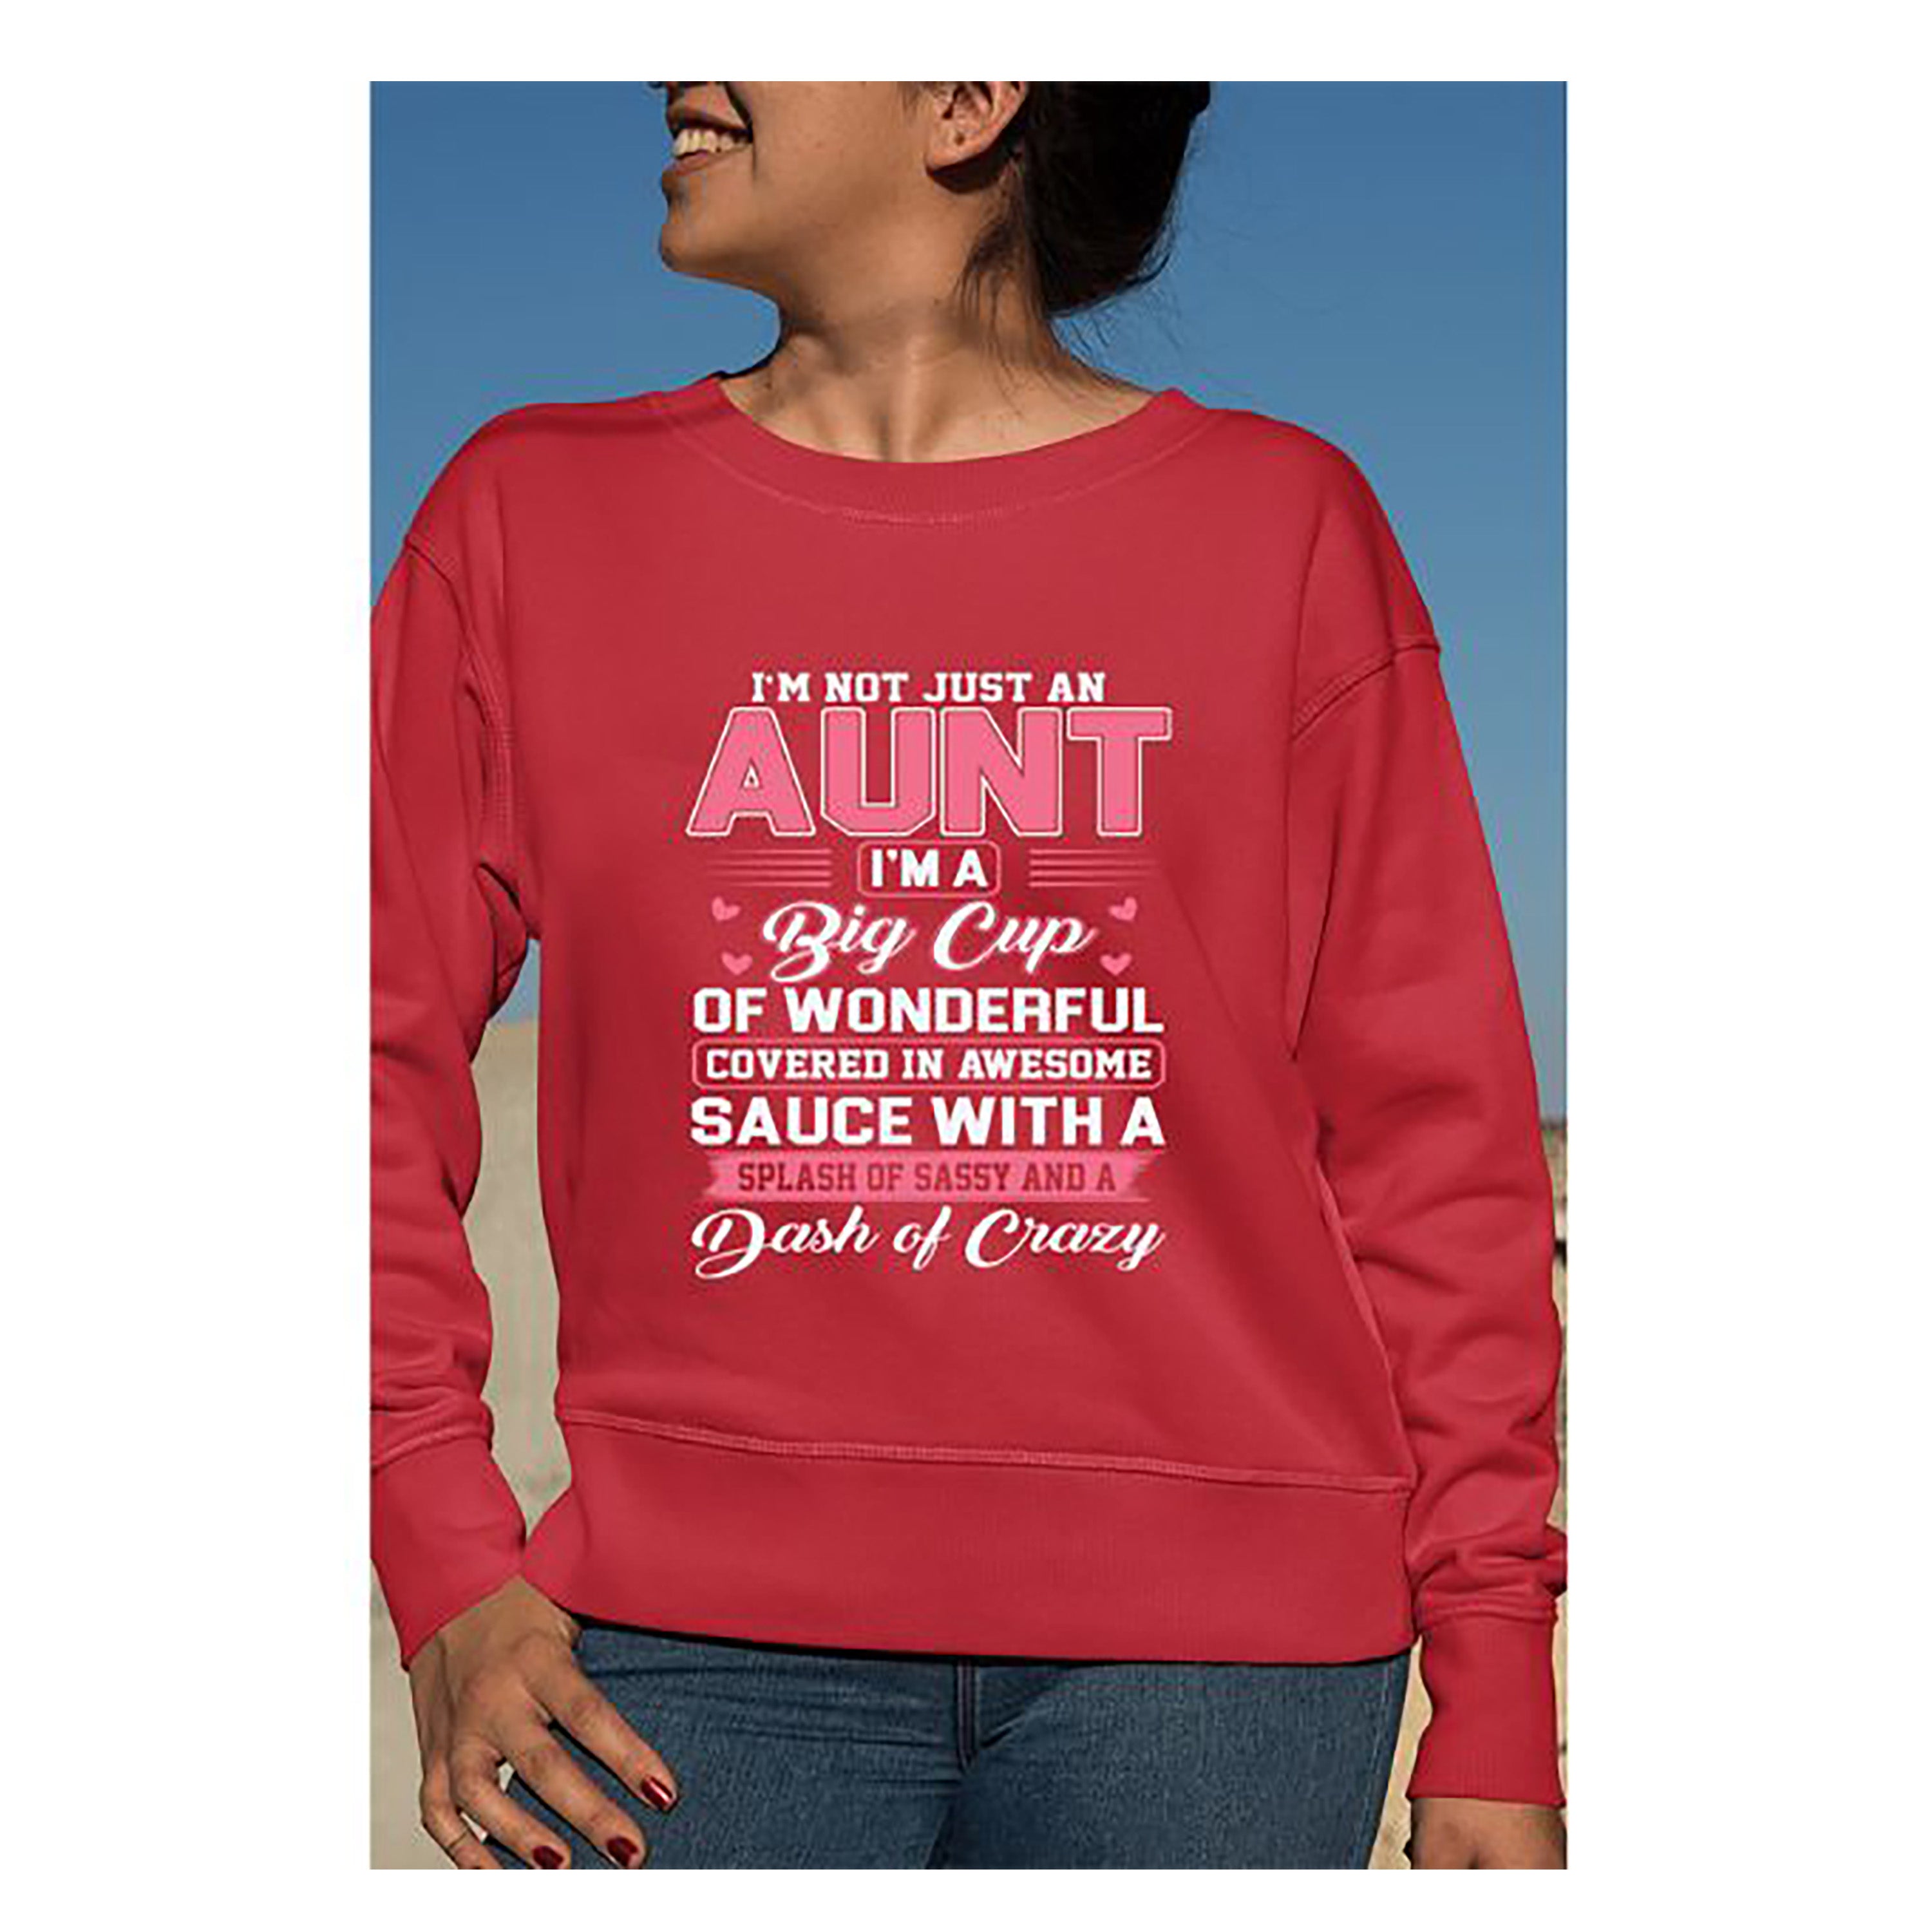 "I'M NOT JUST AN AUNT" Hoodie & Sweatshirt